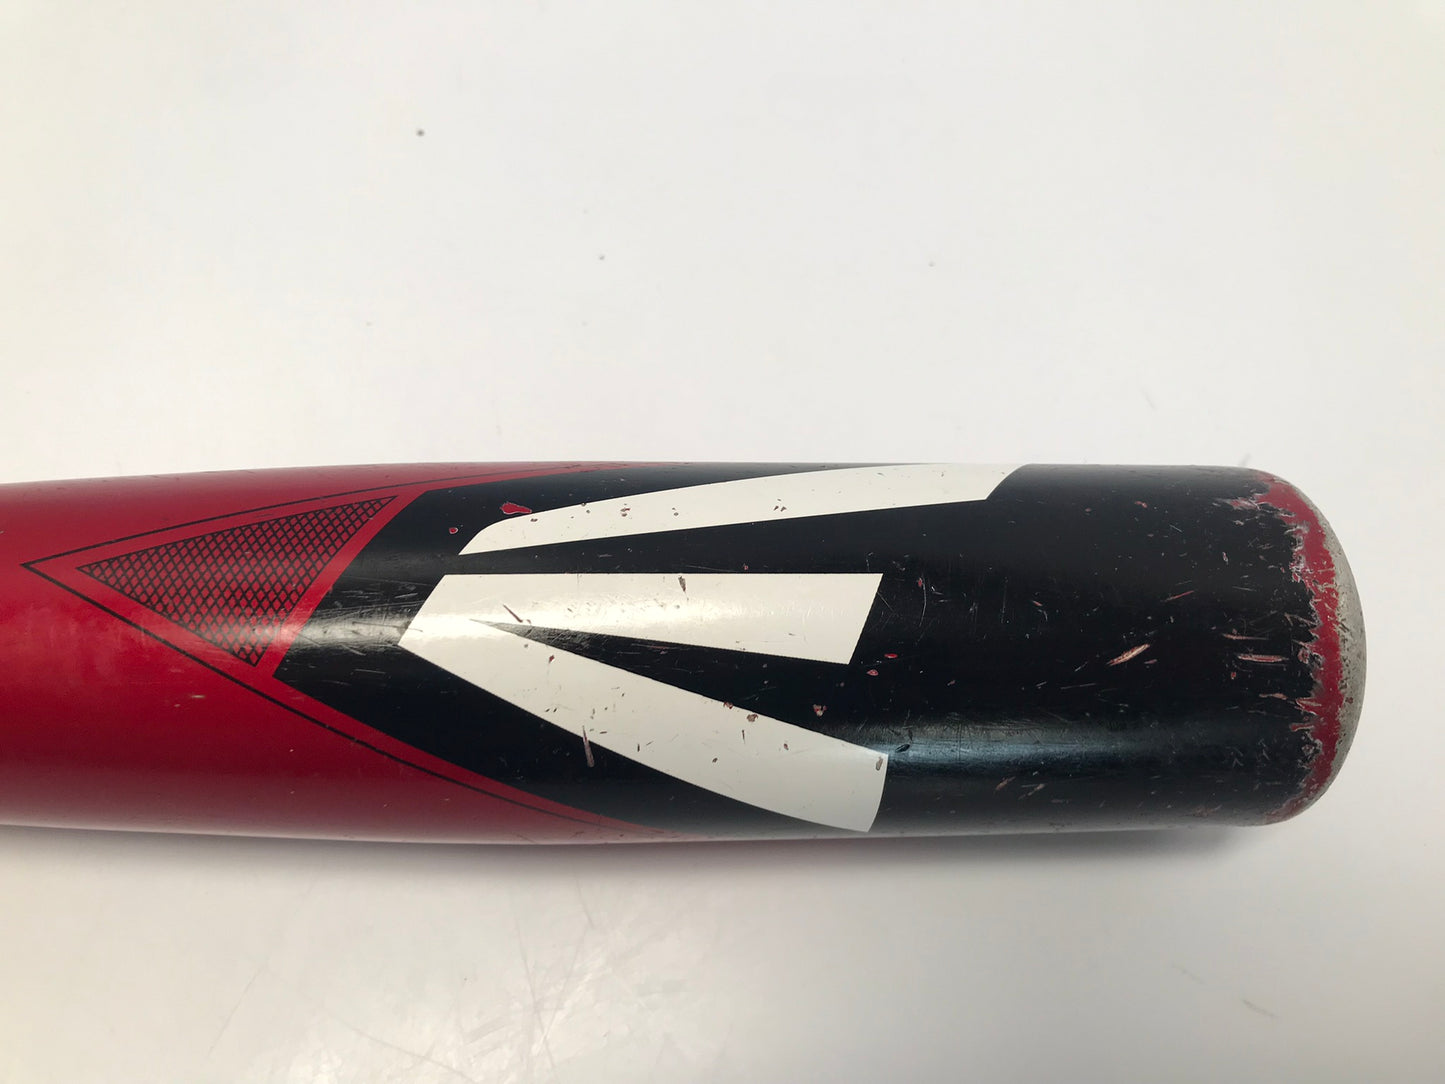 Baseball Bat 26 Inches Easton S 50 1603 Black Red